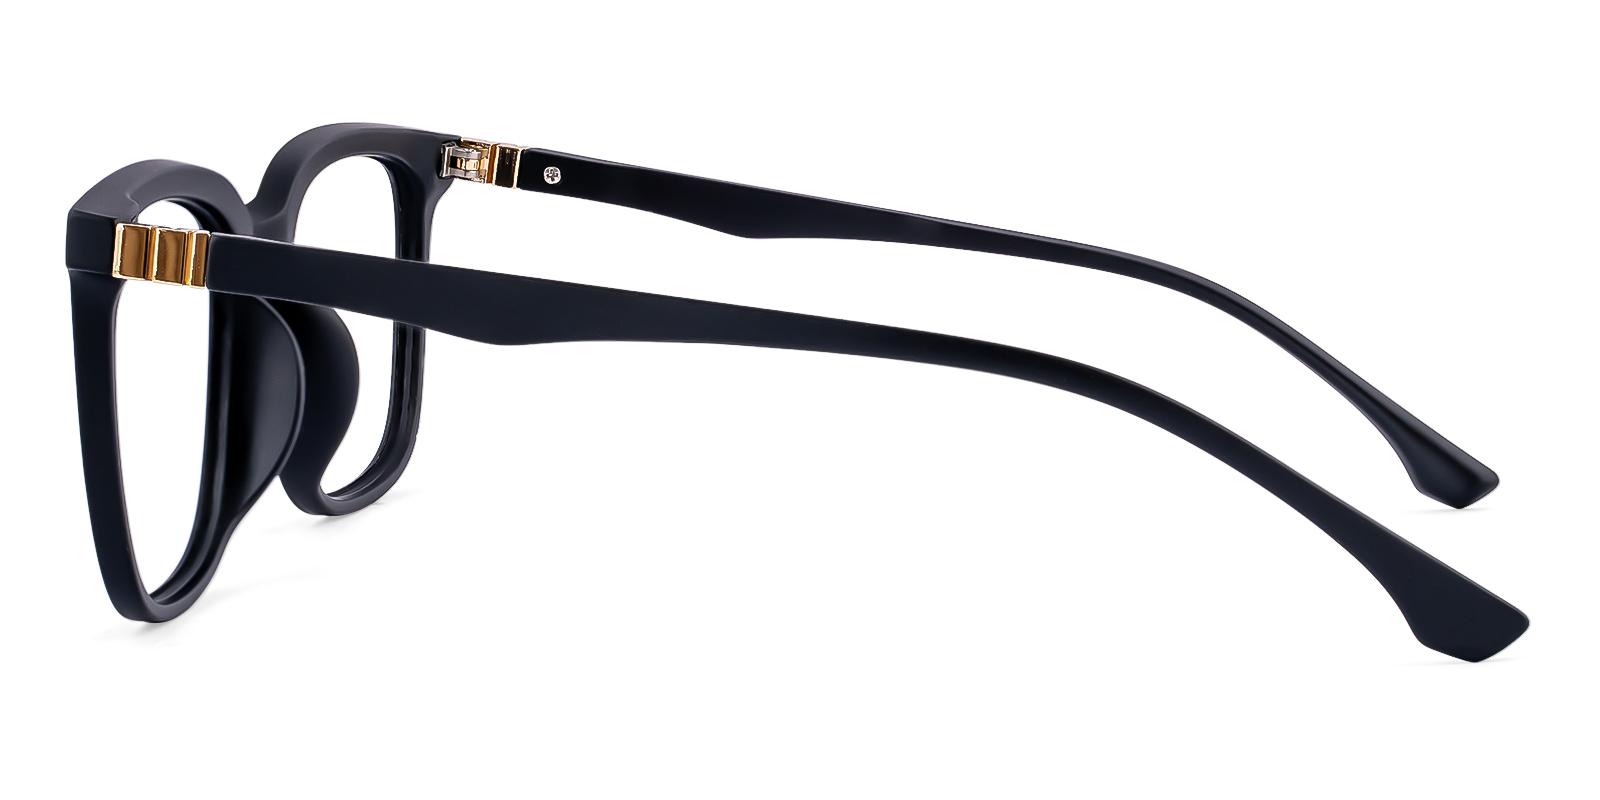 Tachile Matte-black Plastic Eyeglasses , UniversalBridgeFit Frames from ABBE Glasses